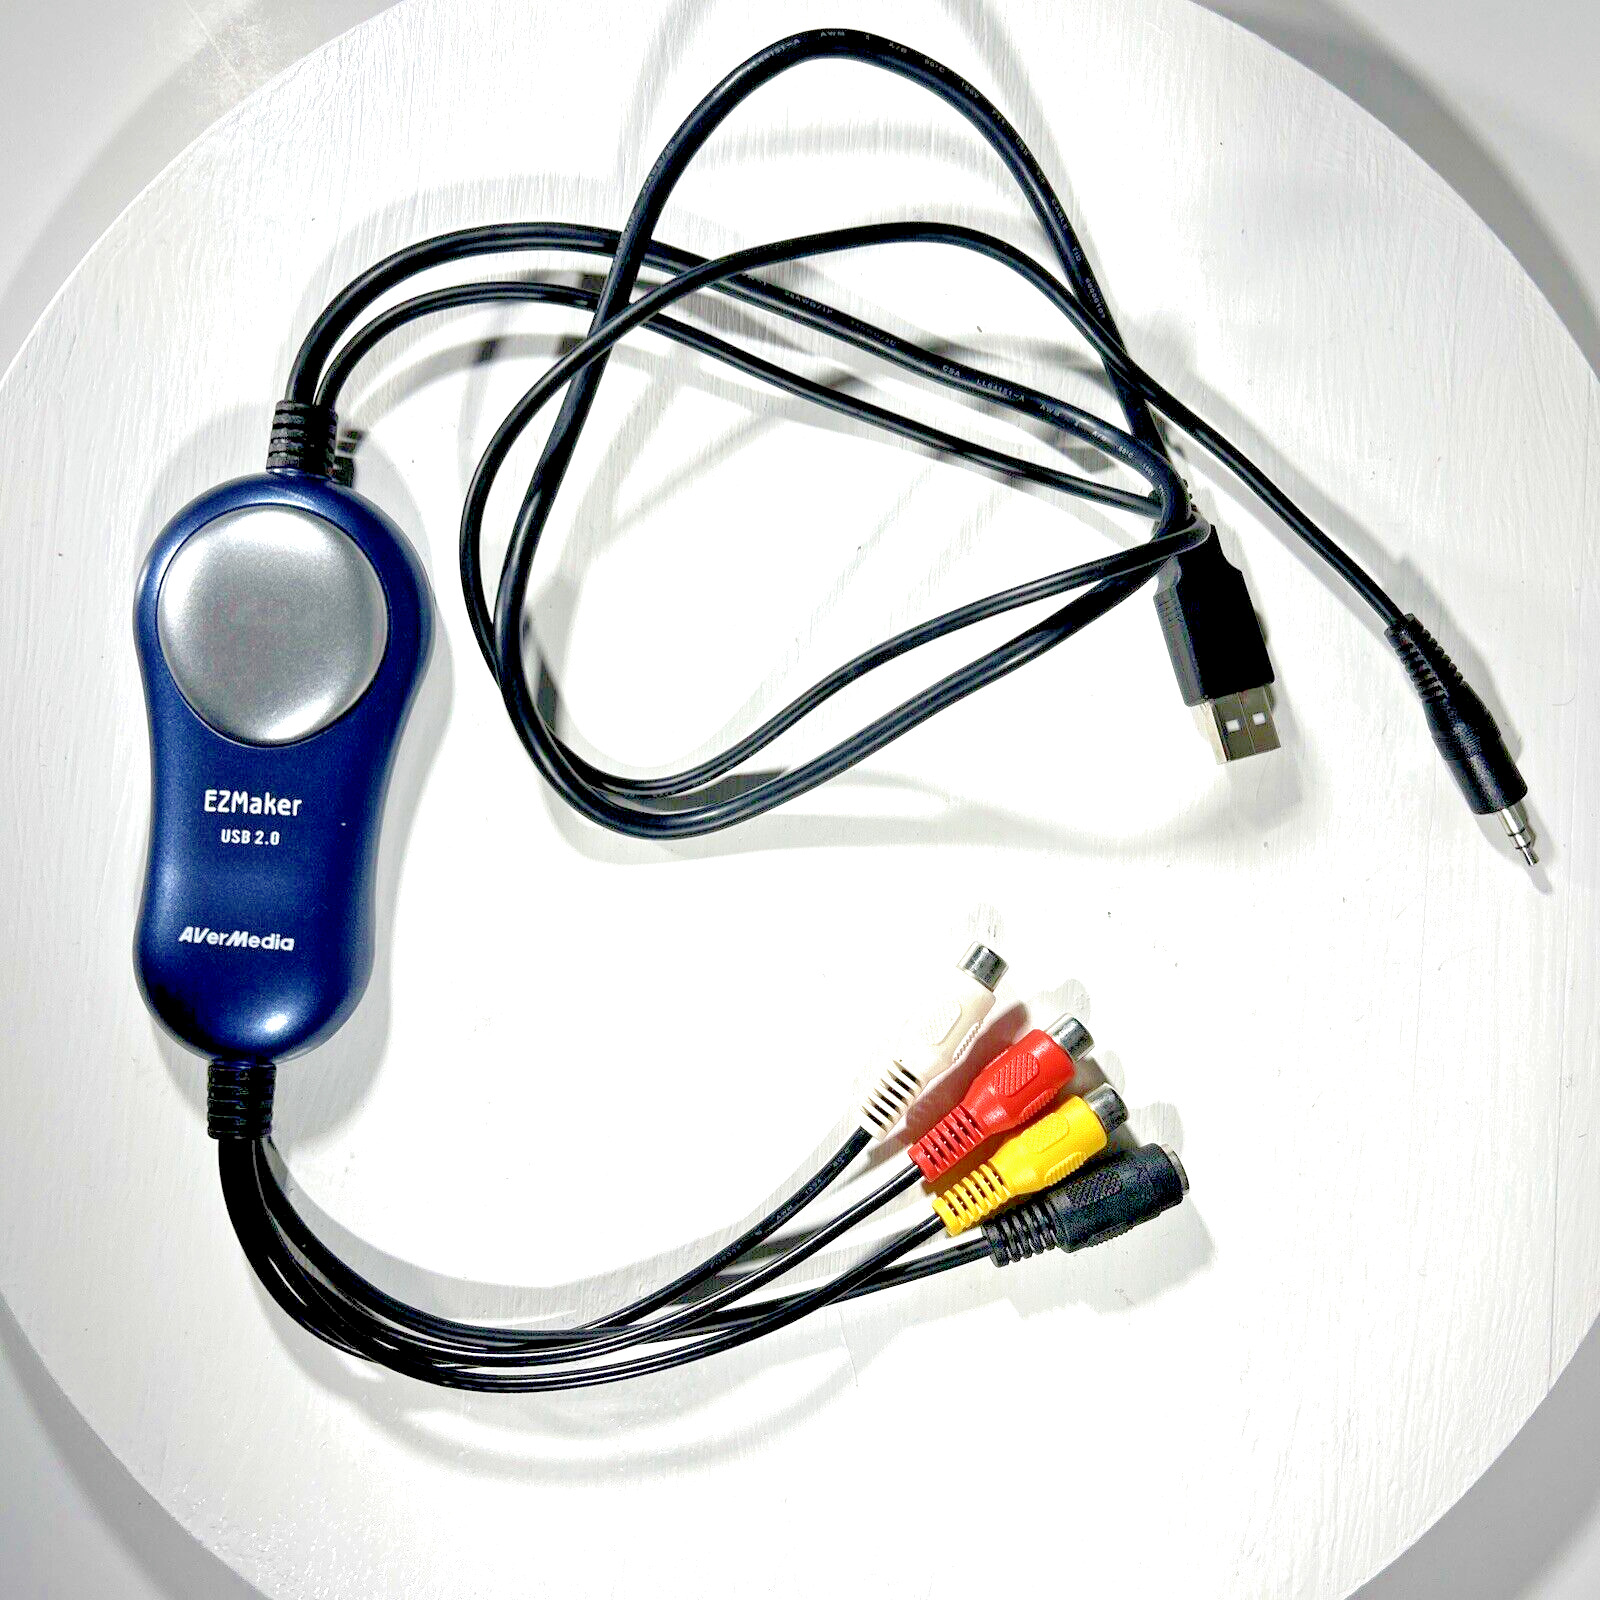 AVerMedia DVD EZMaker USB 2 Record S-video Composite Video Stereo Audio VHS Tape